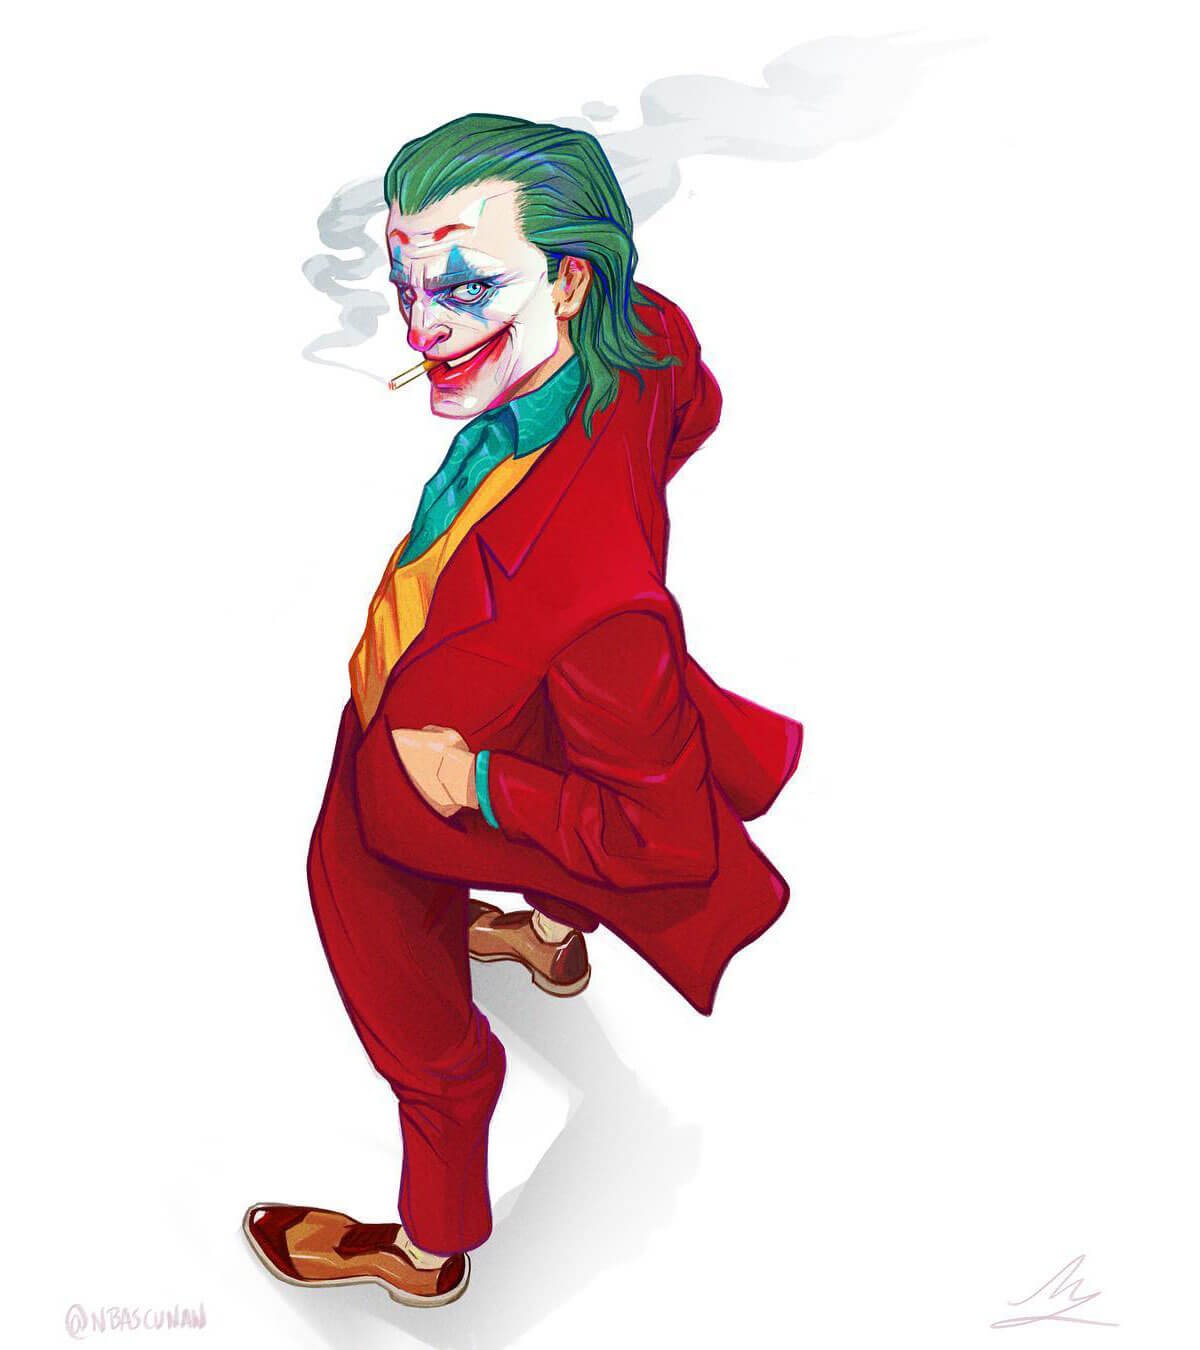 The Joker by Nico Bascuñán